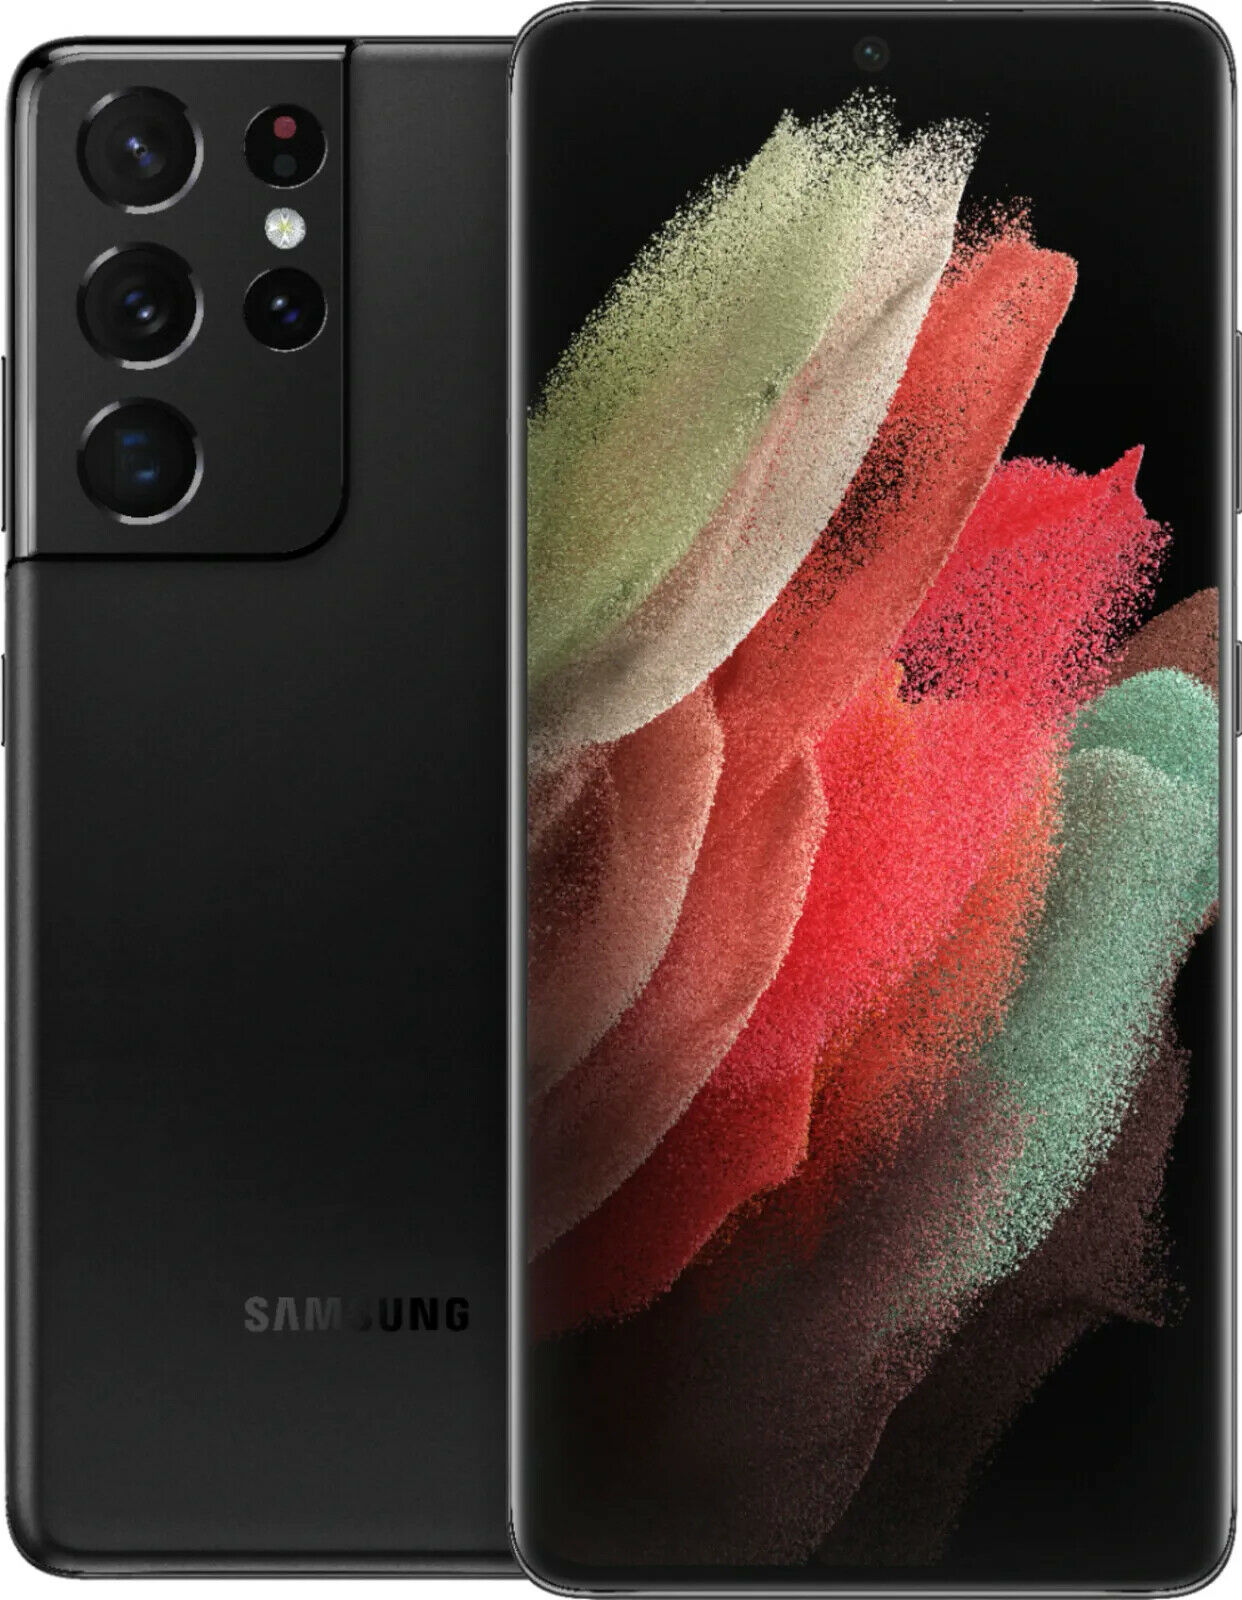 Like New Samsung Galaxy S21 Ultra 5G SM-G998U1 128GB Black (US Model) - Factory Unlocked Cell Phone - image 3 of 3